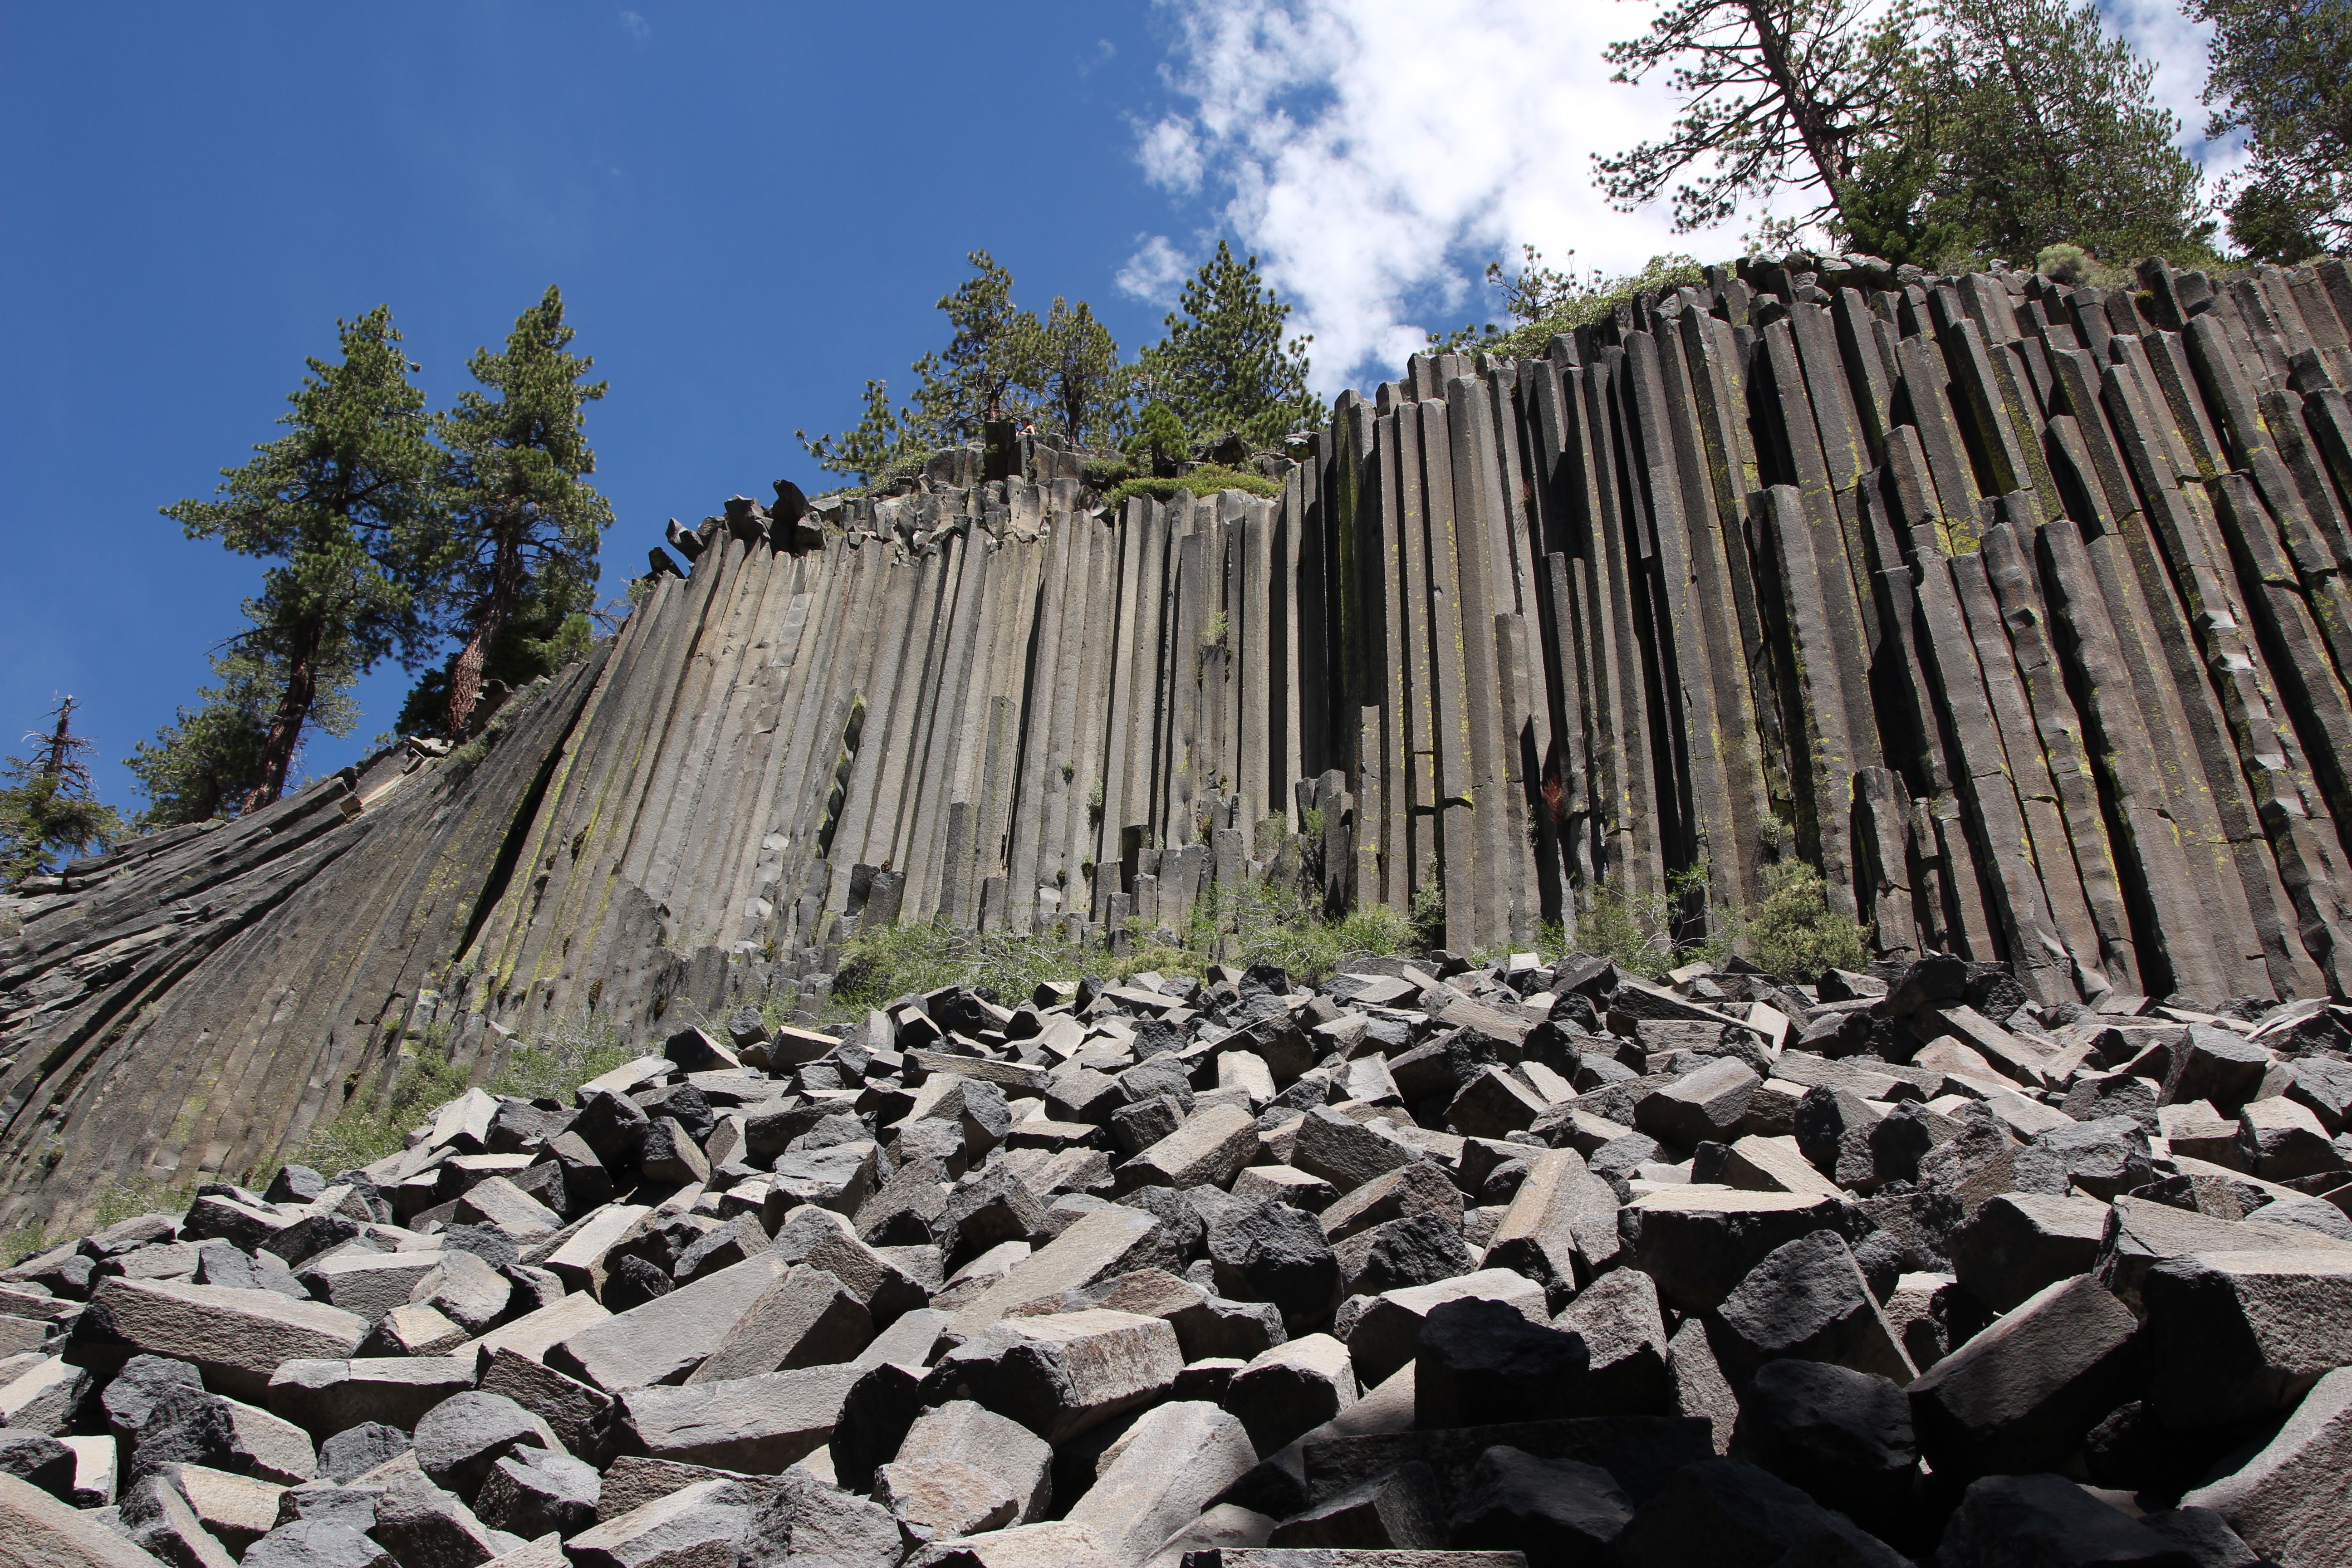 The Devils Postpile basalt formation resembles tall columns.